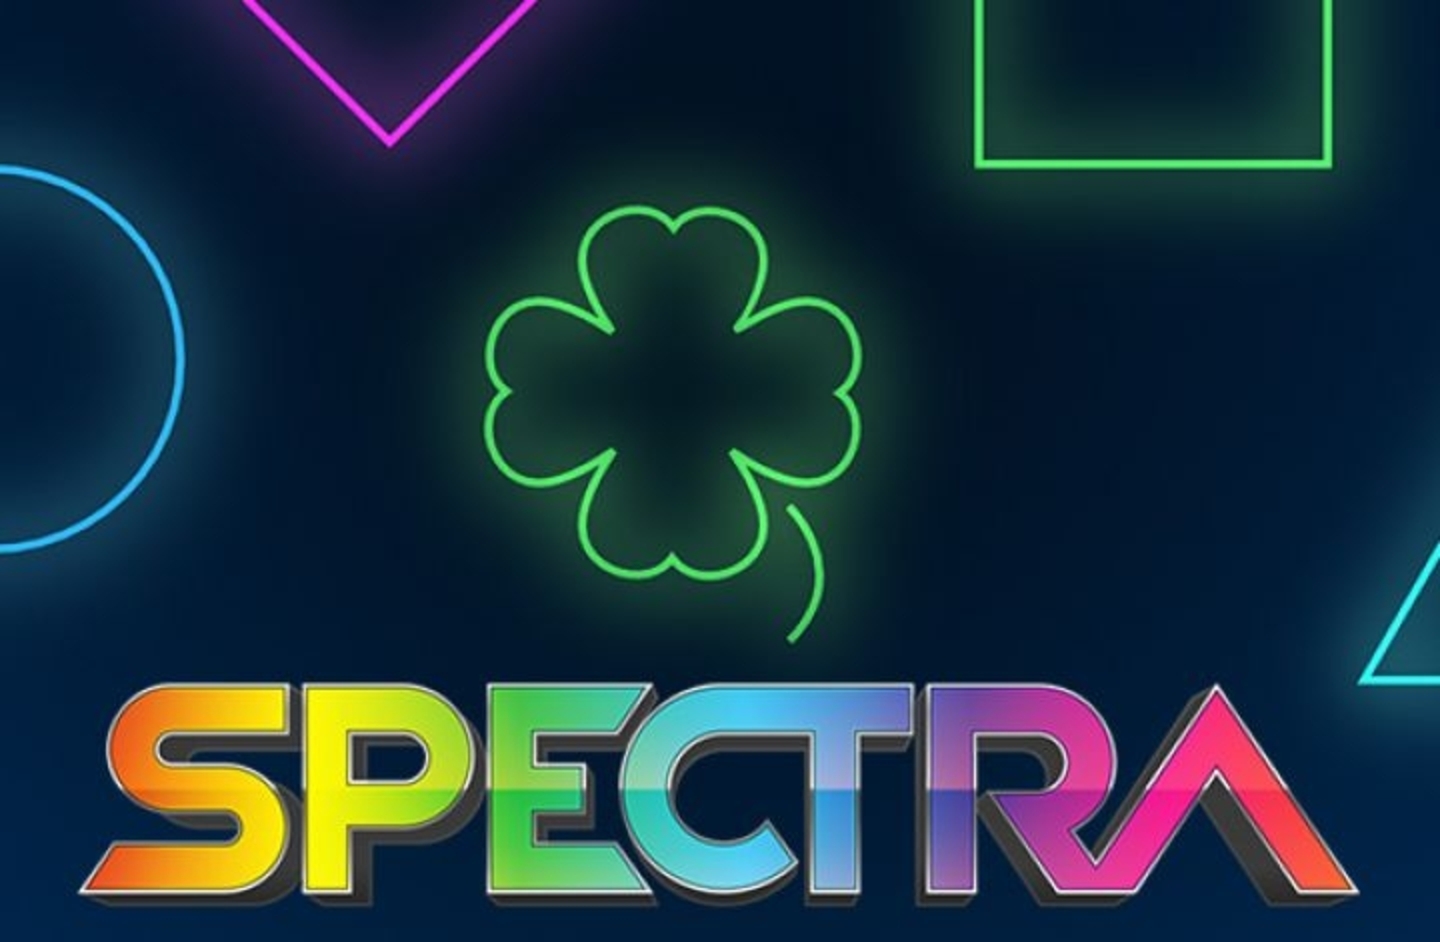 Spectra demo